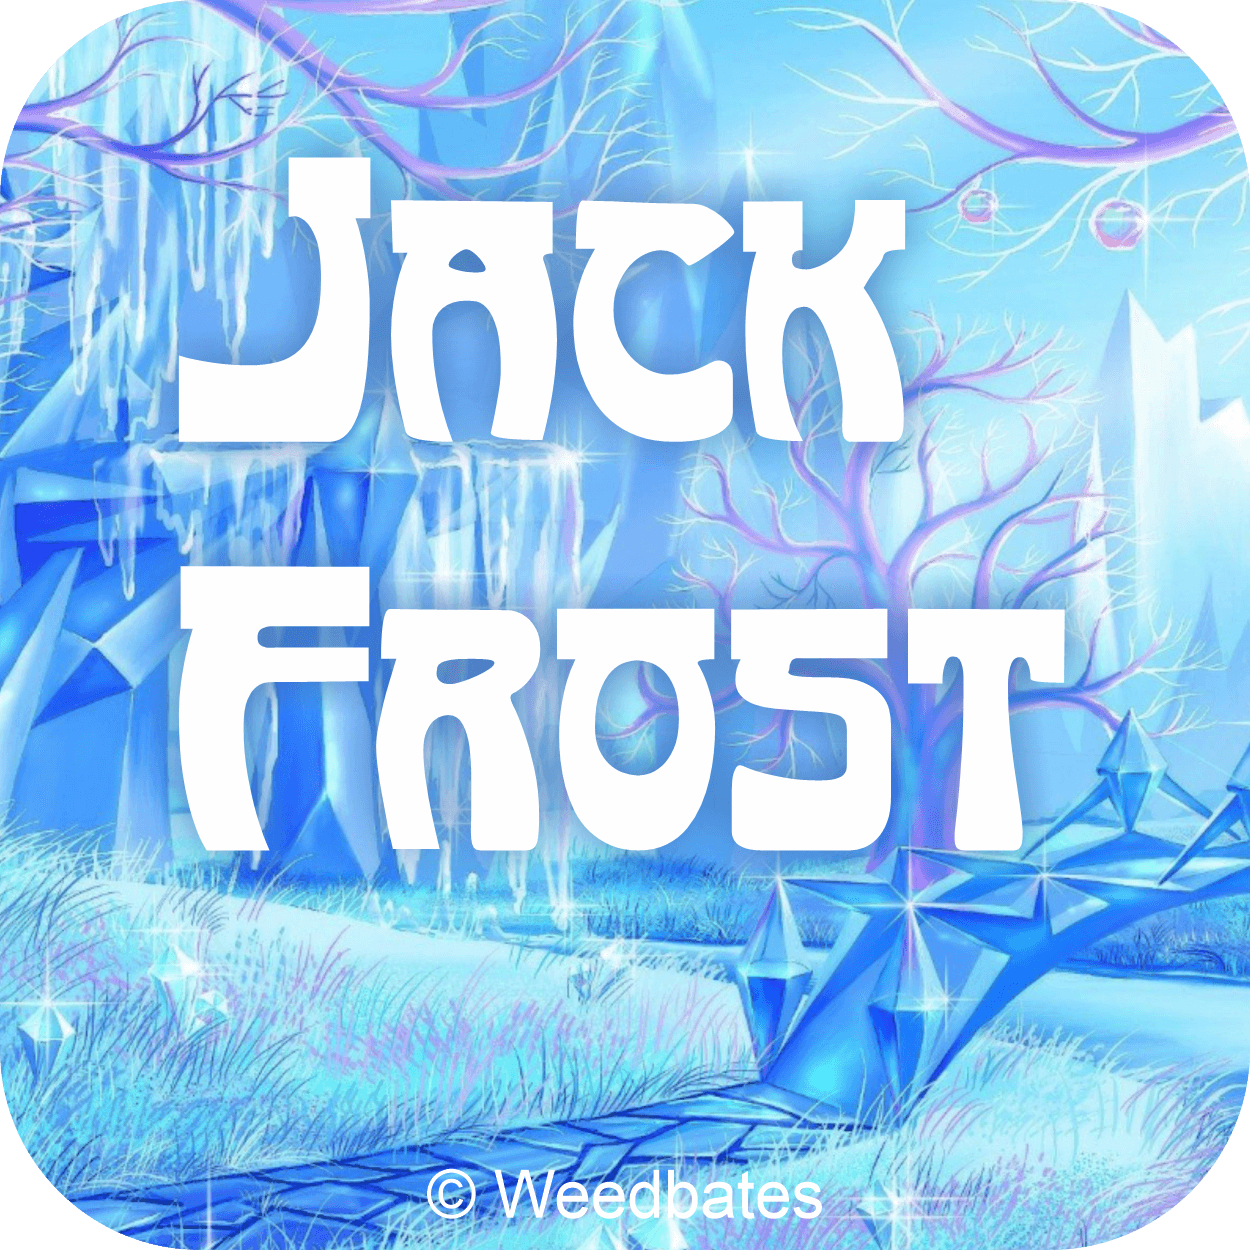 Jack Frost strain